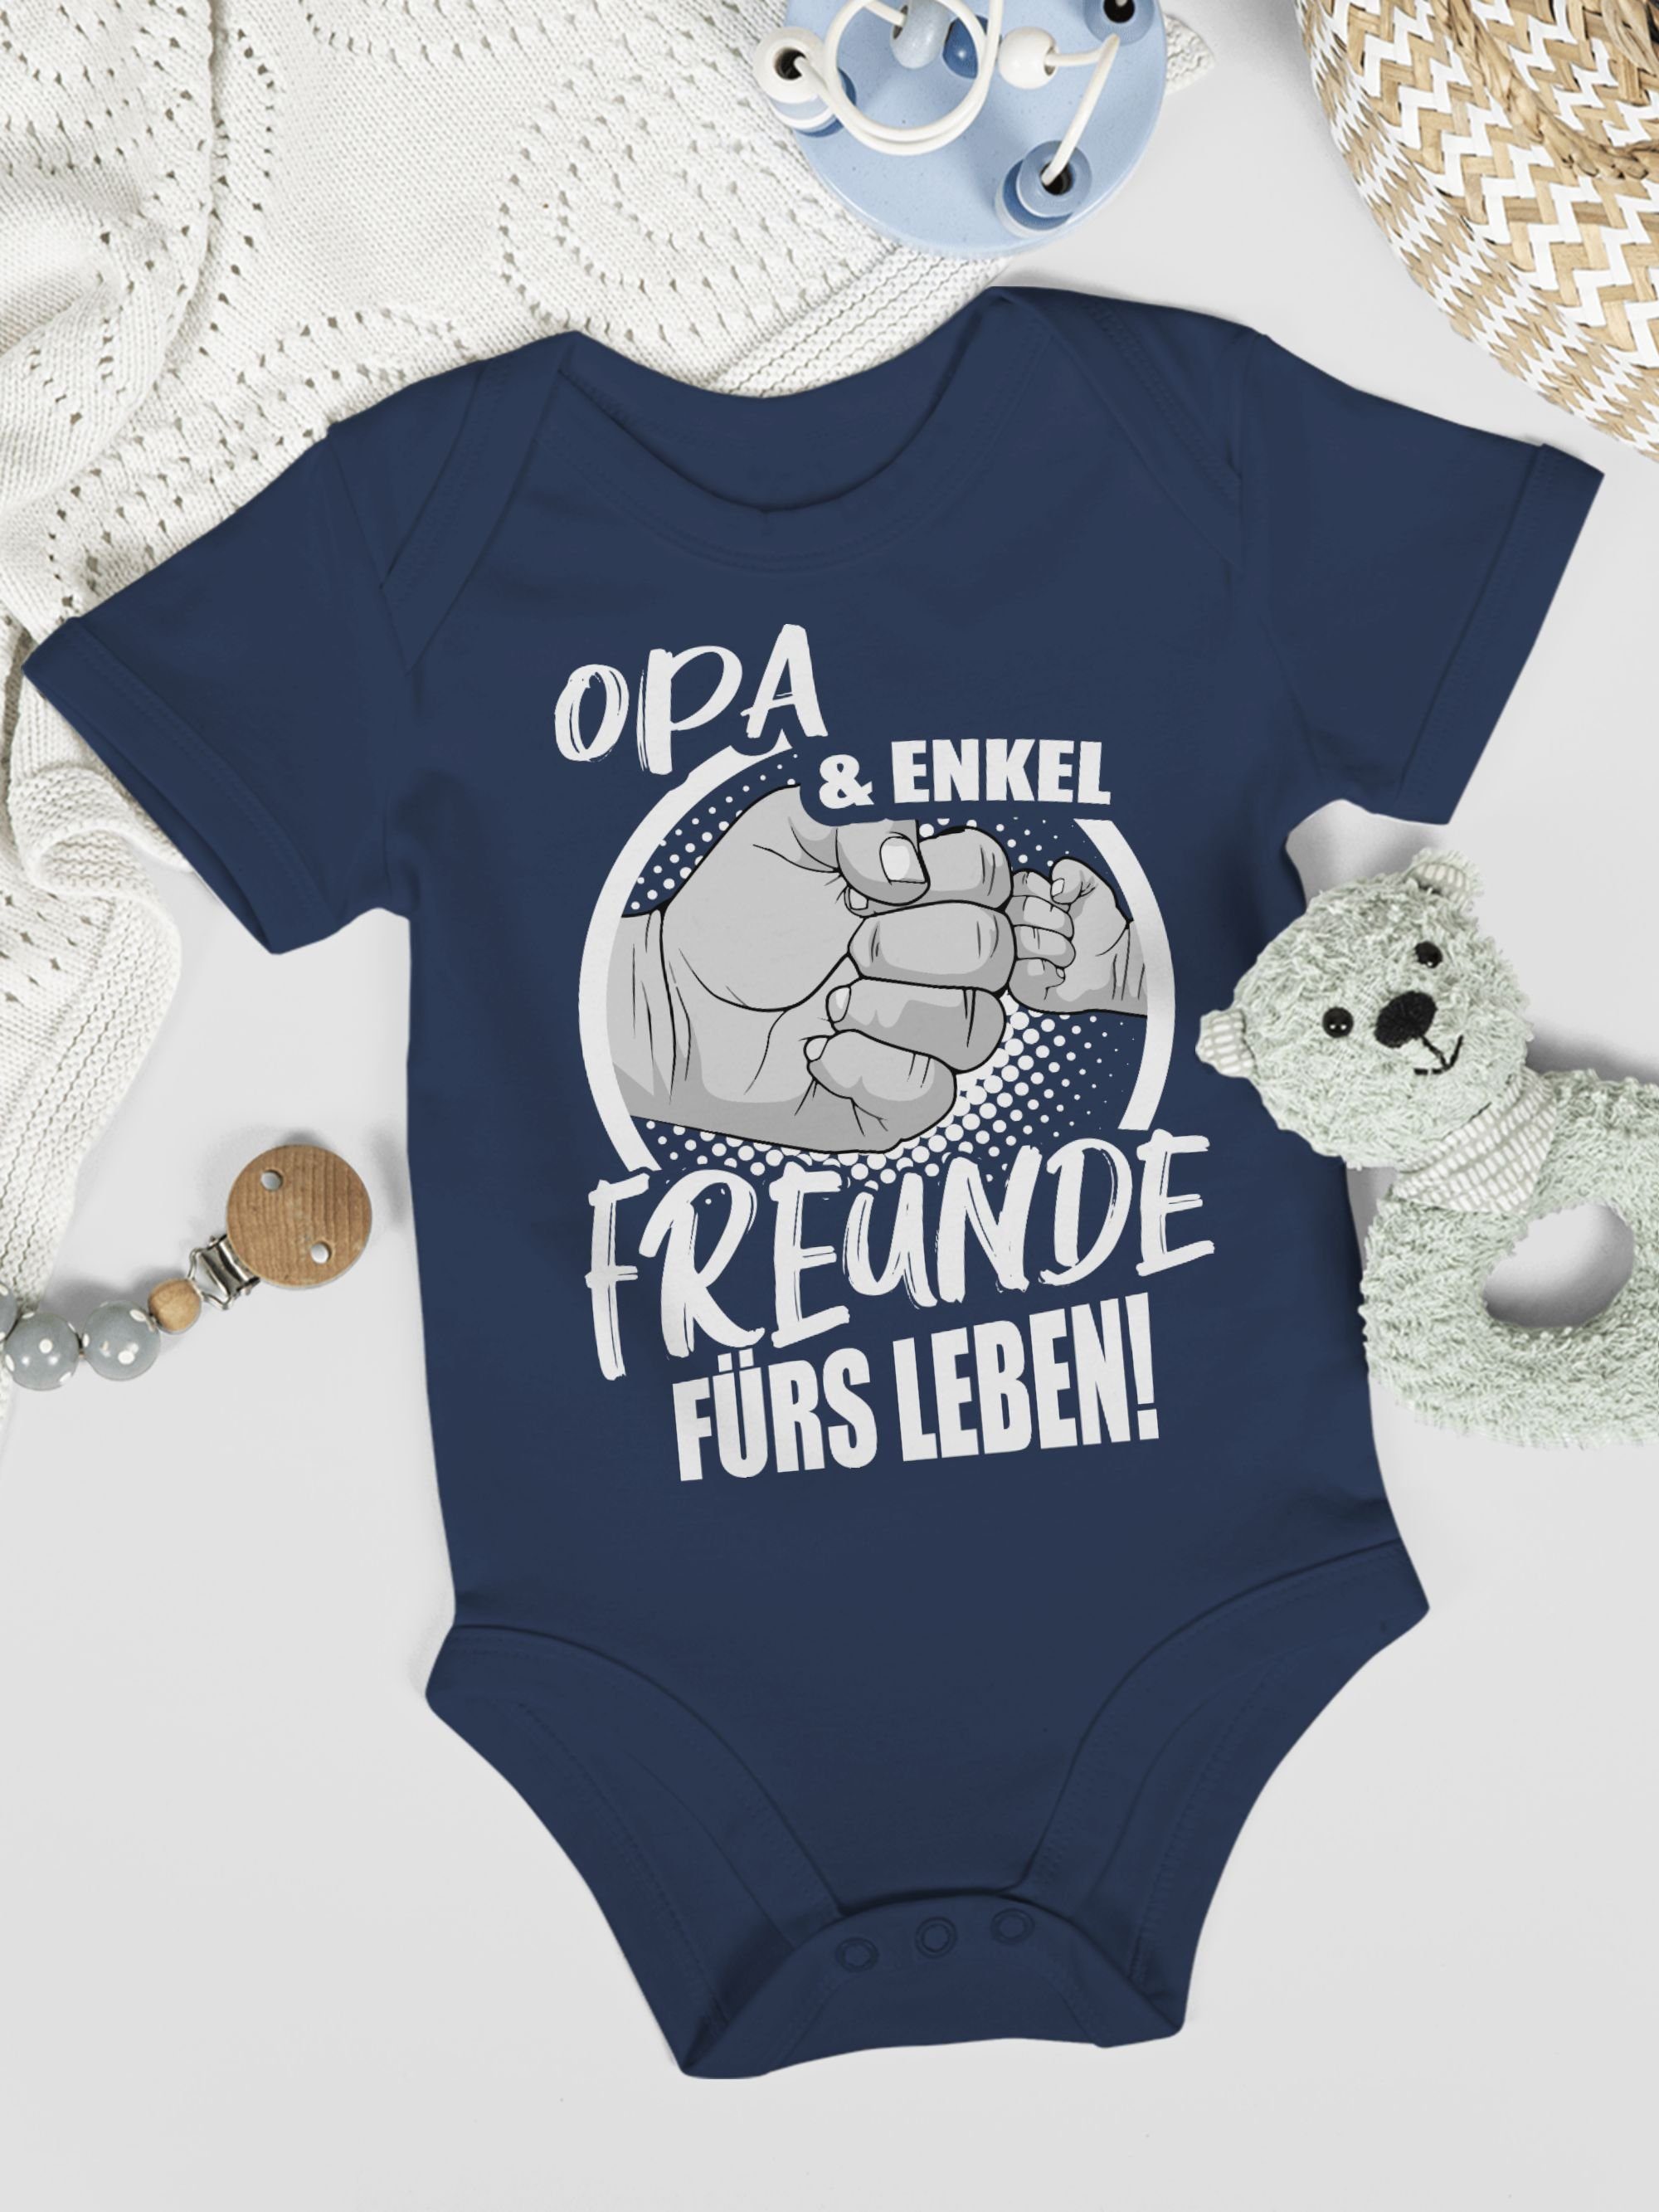 Shirtracer Shirtbody Opa Blau Enkel 2 Navy Baby & Partner-Look Familie fürs Leben! Freunde